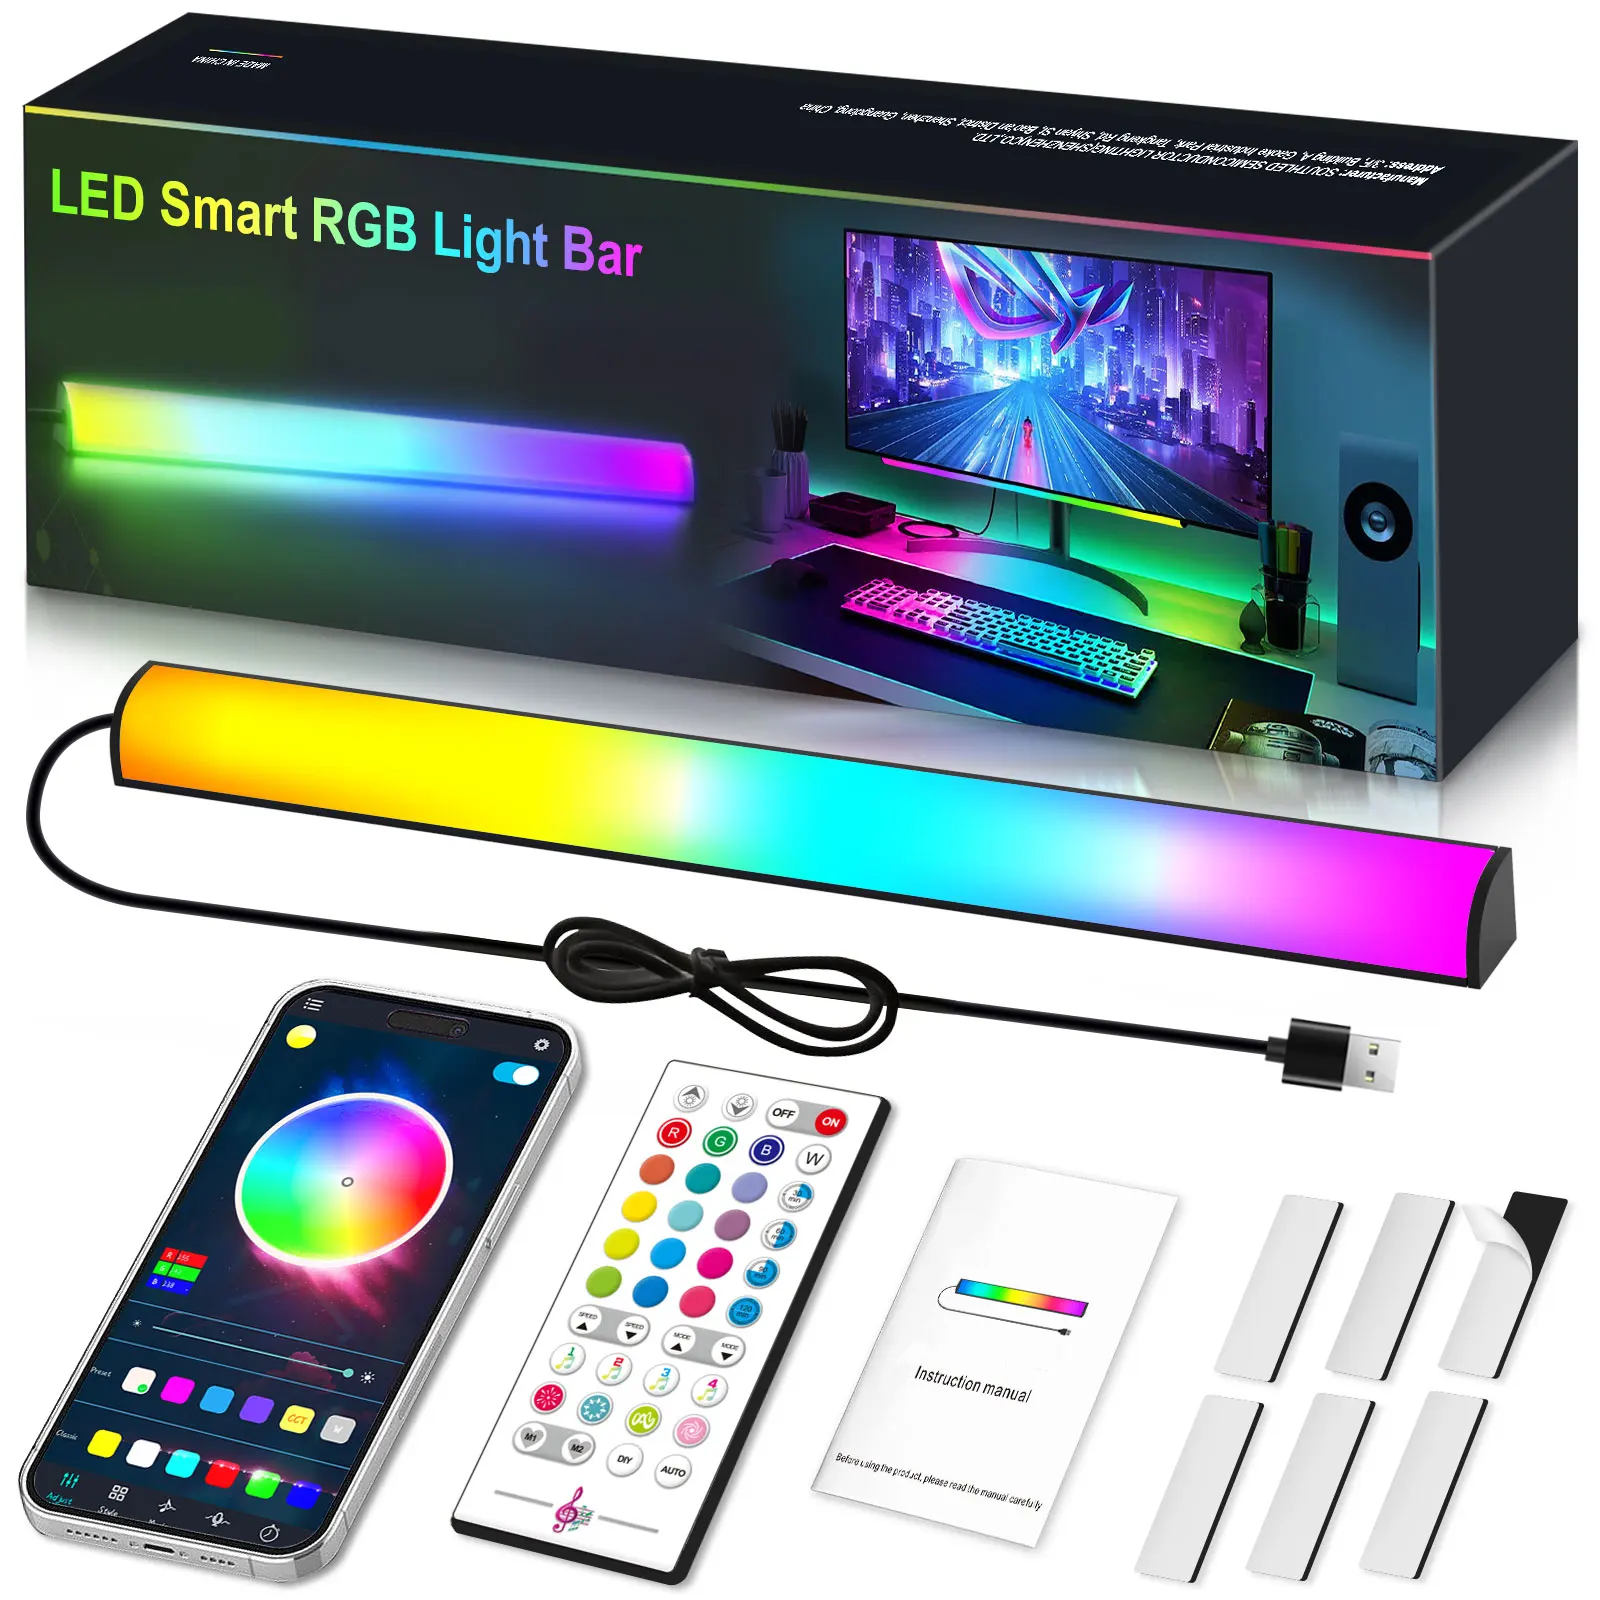 Display downward light bar, RGB screen light bar, desktop light PC, dimmable LED dynamic rainbow effect, adjustable brightness,